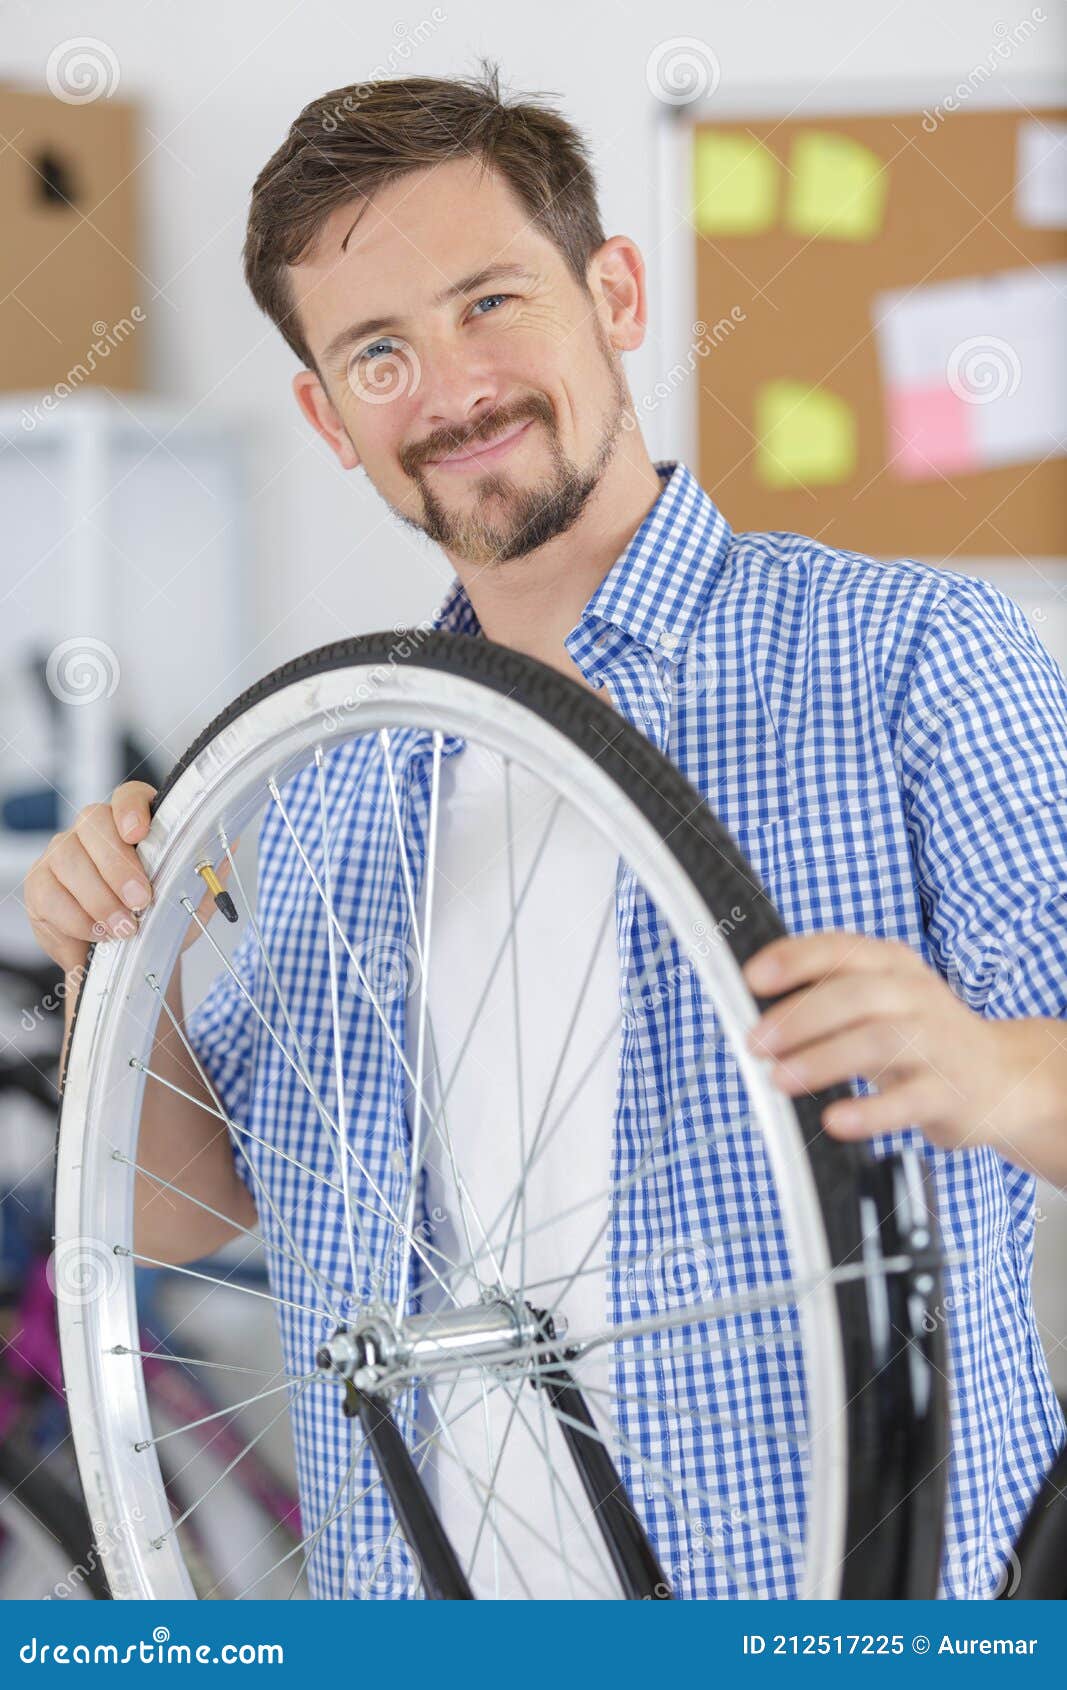 male smiling master holding bike wheel